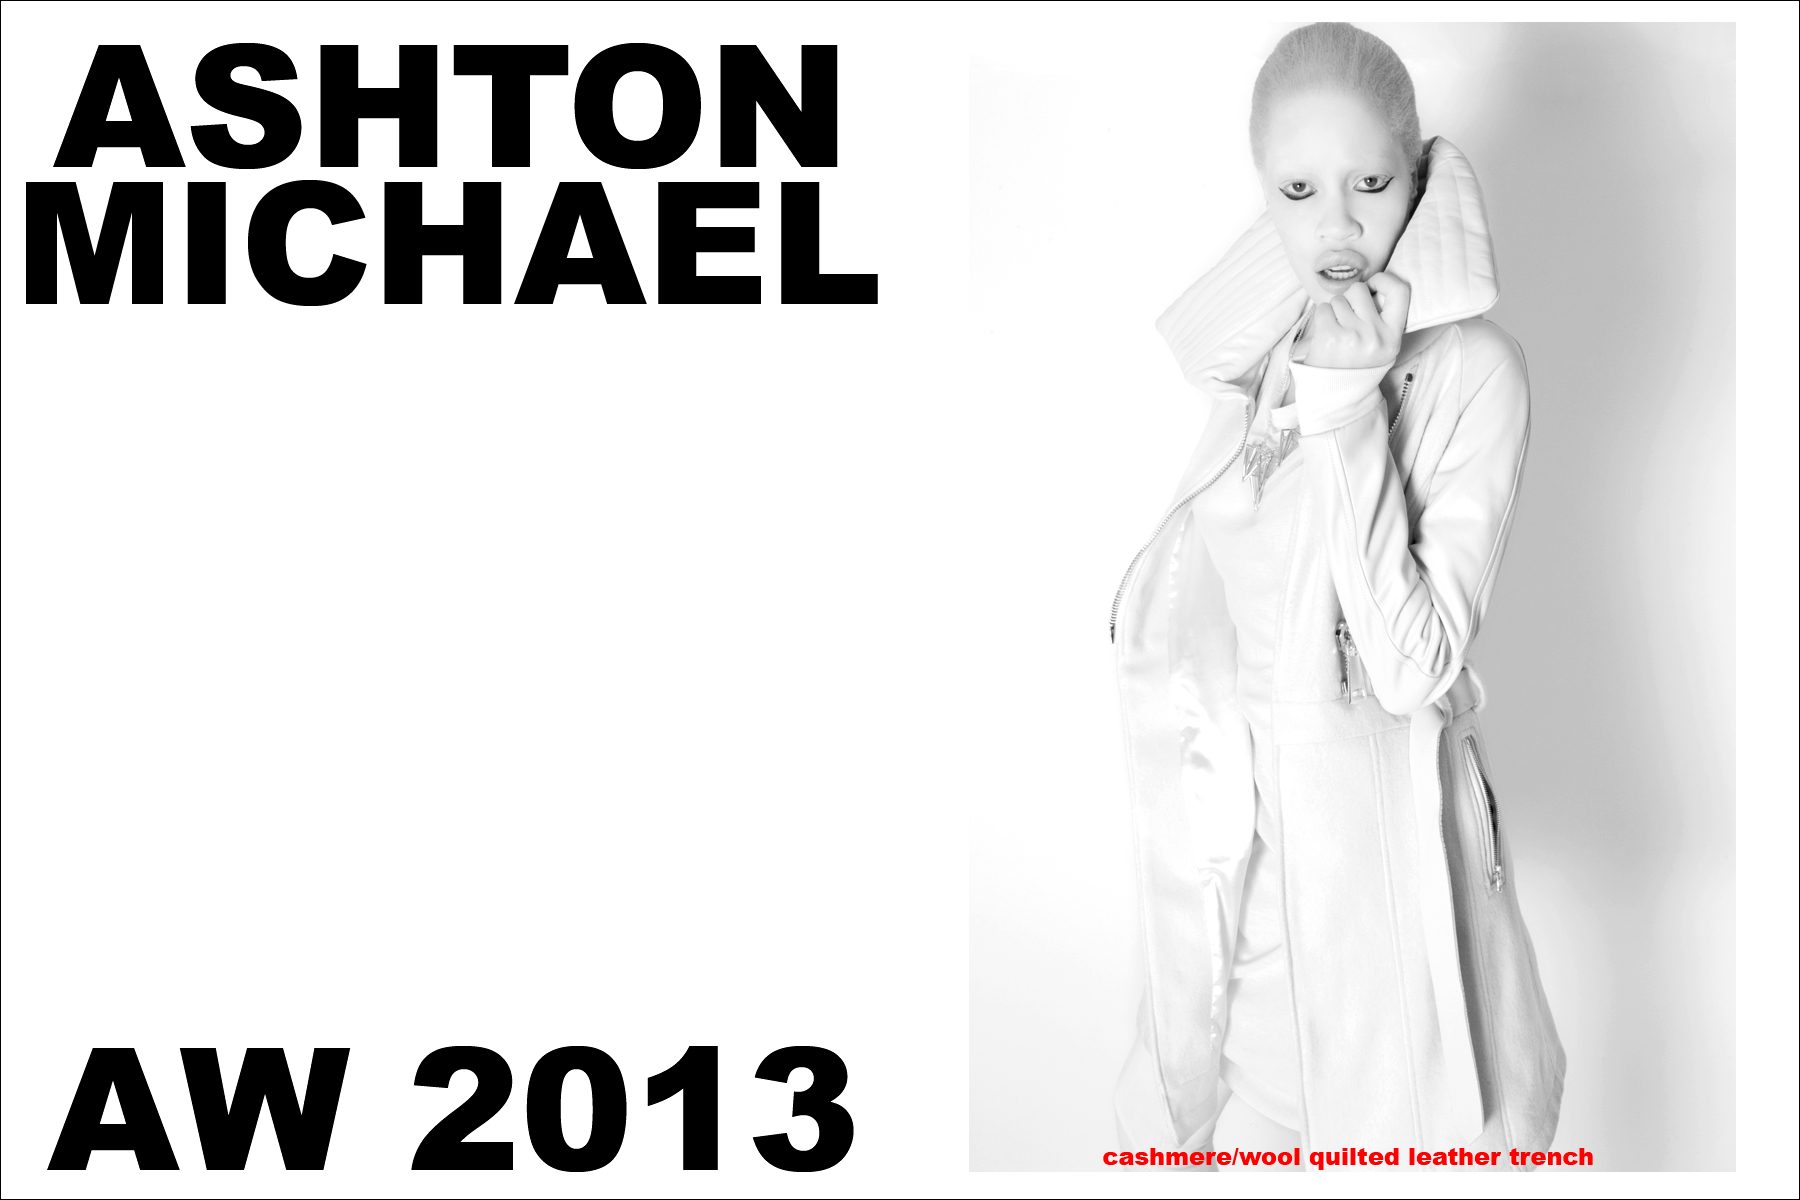 Ashton Michael AW 2013, photographed by Alexander Thompson for Ponyboy Magazine.